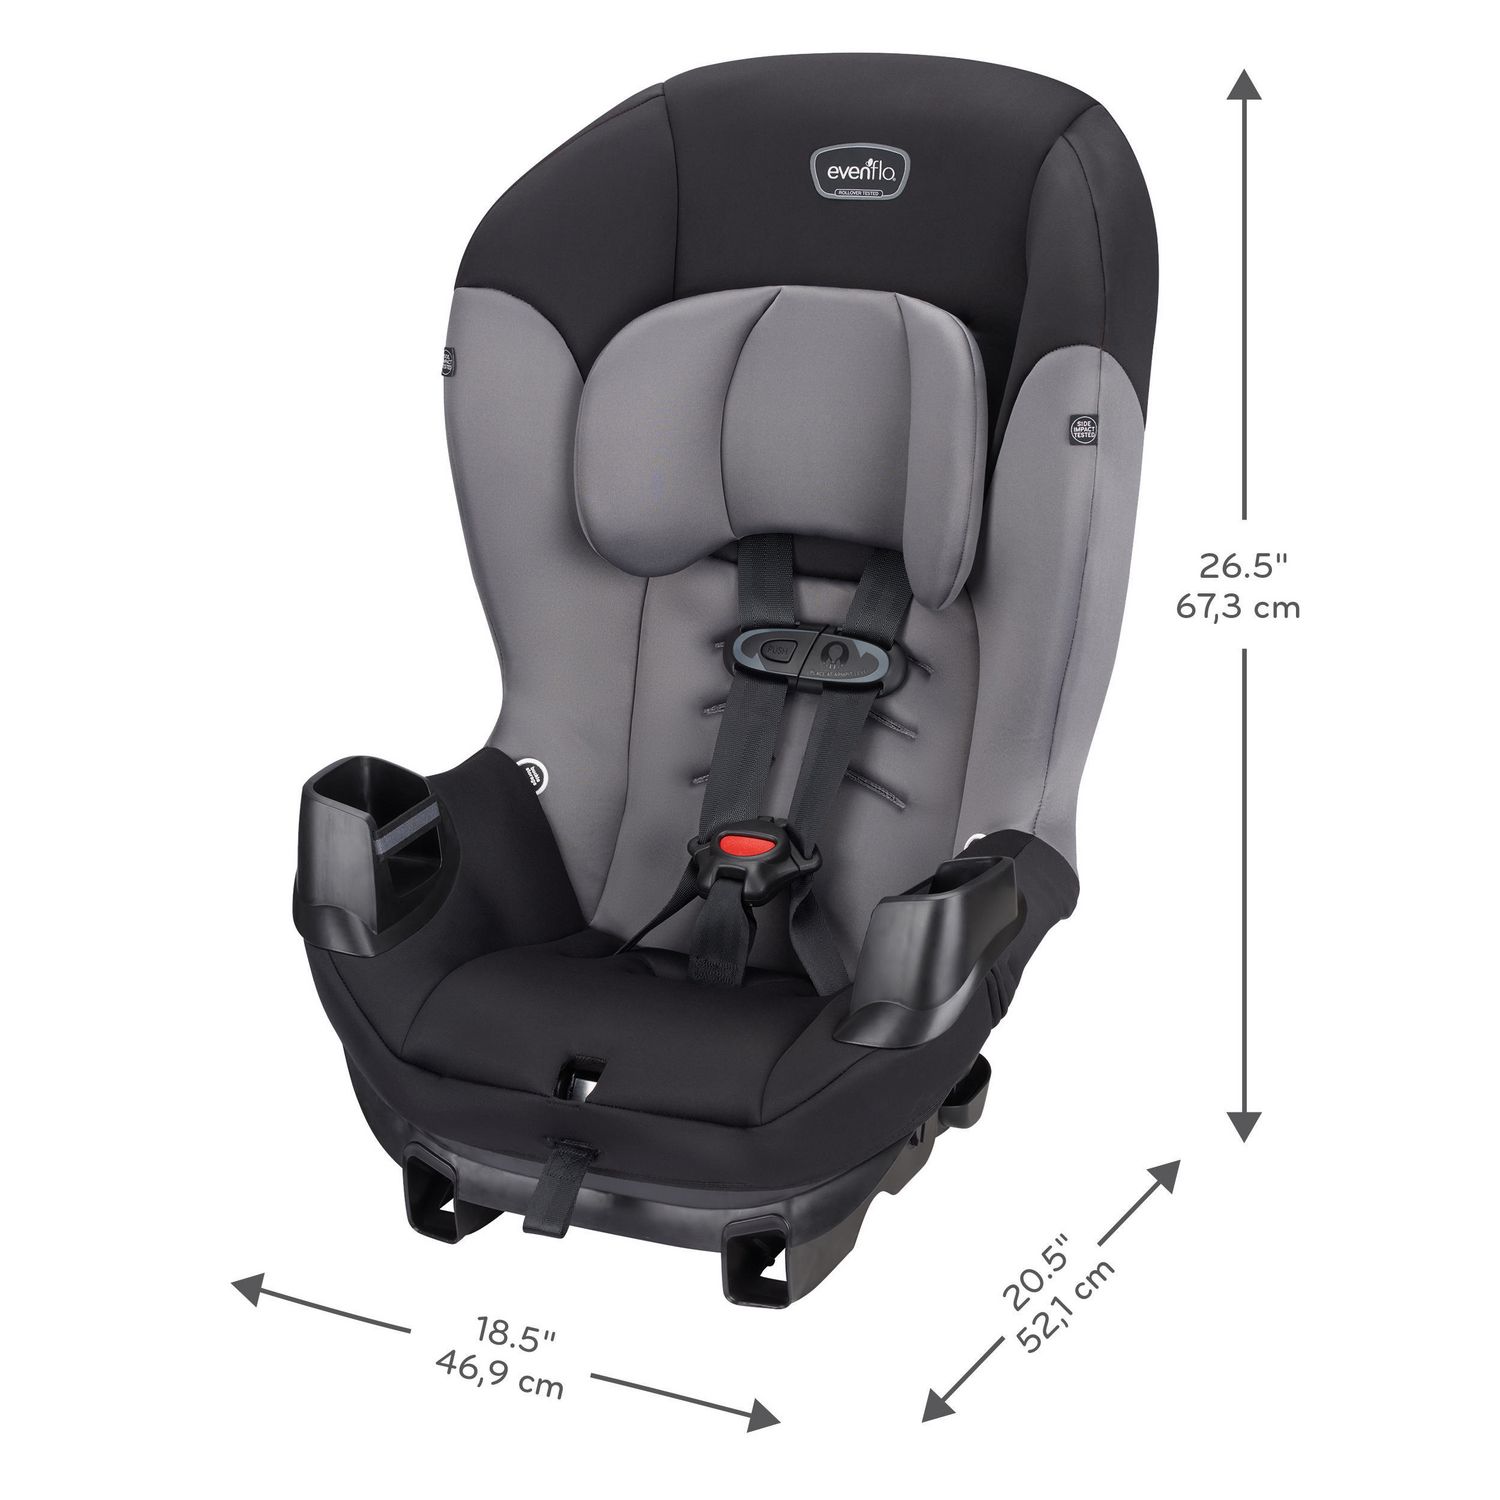 Evenflo Sonus Convertible Car Seat, Child Weight 5-50 lbs